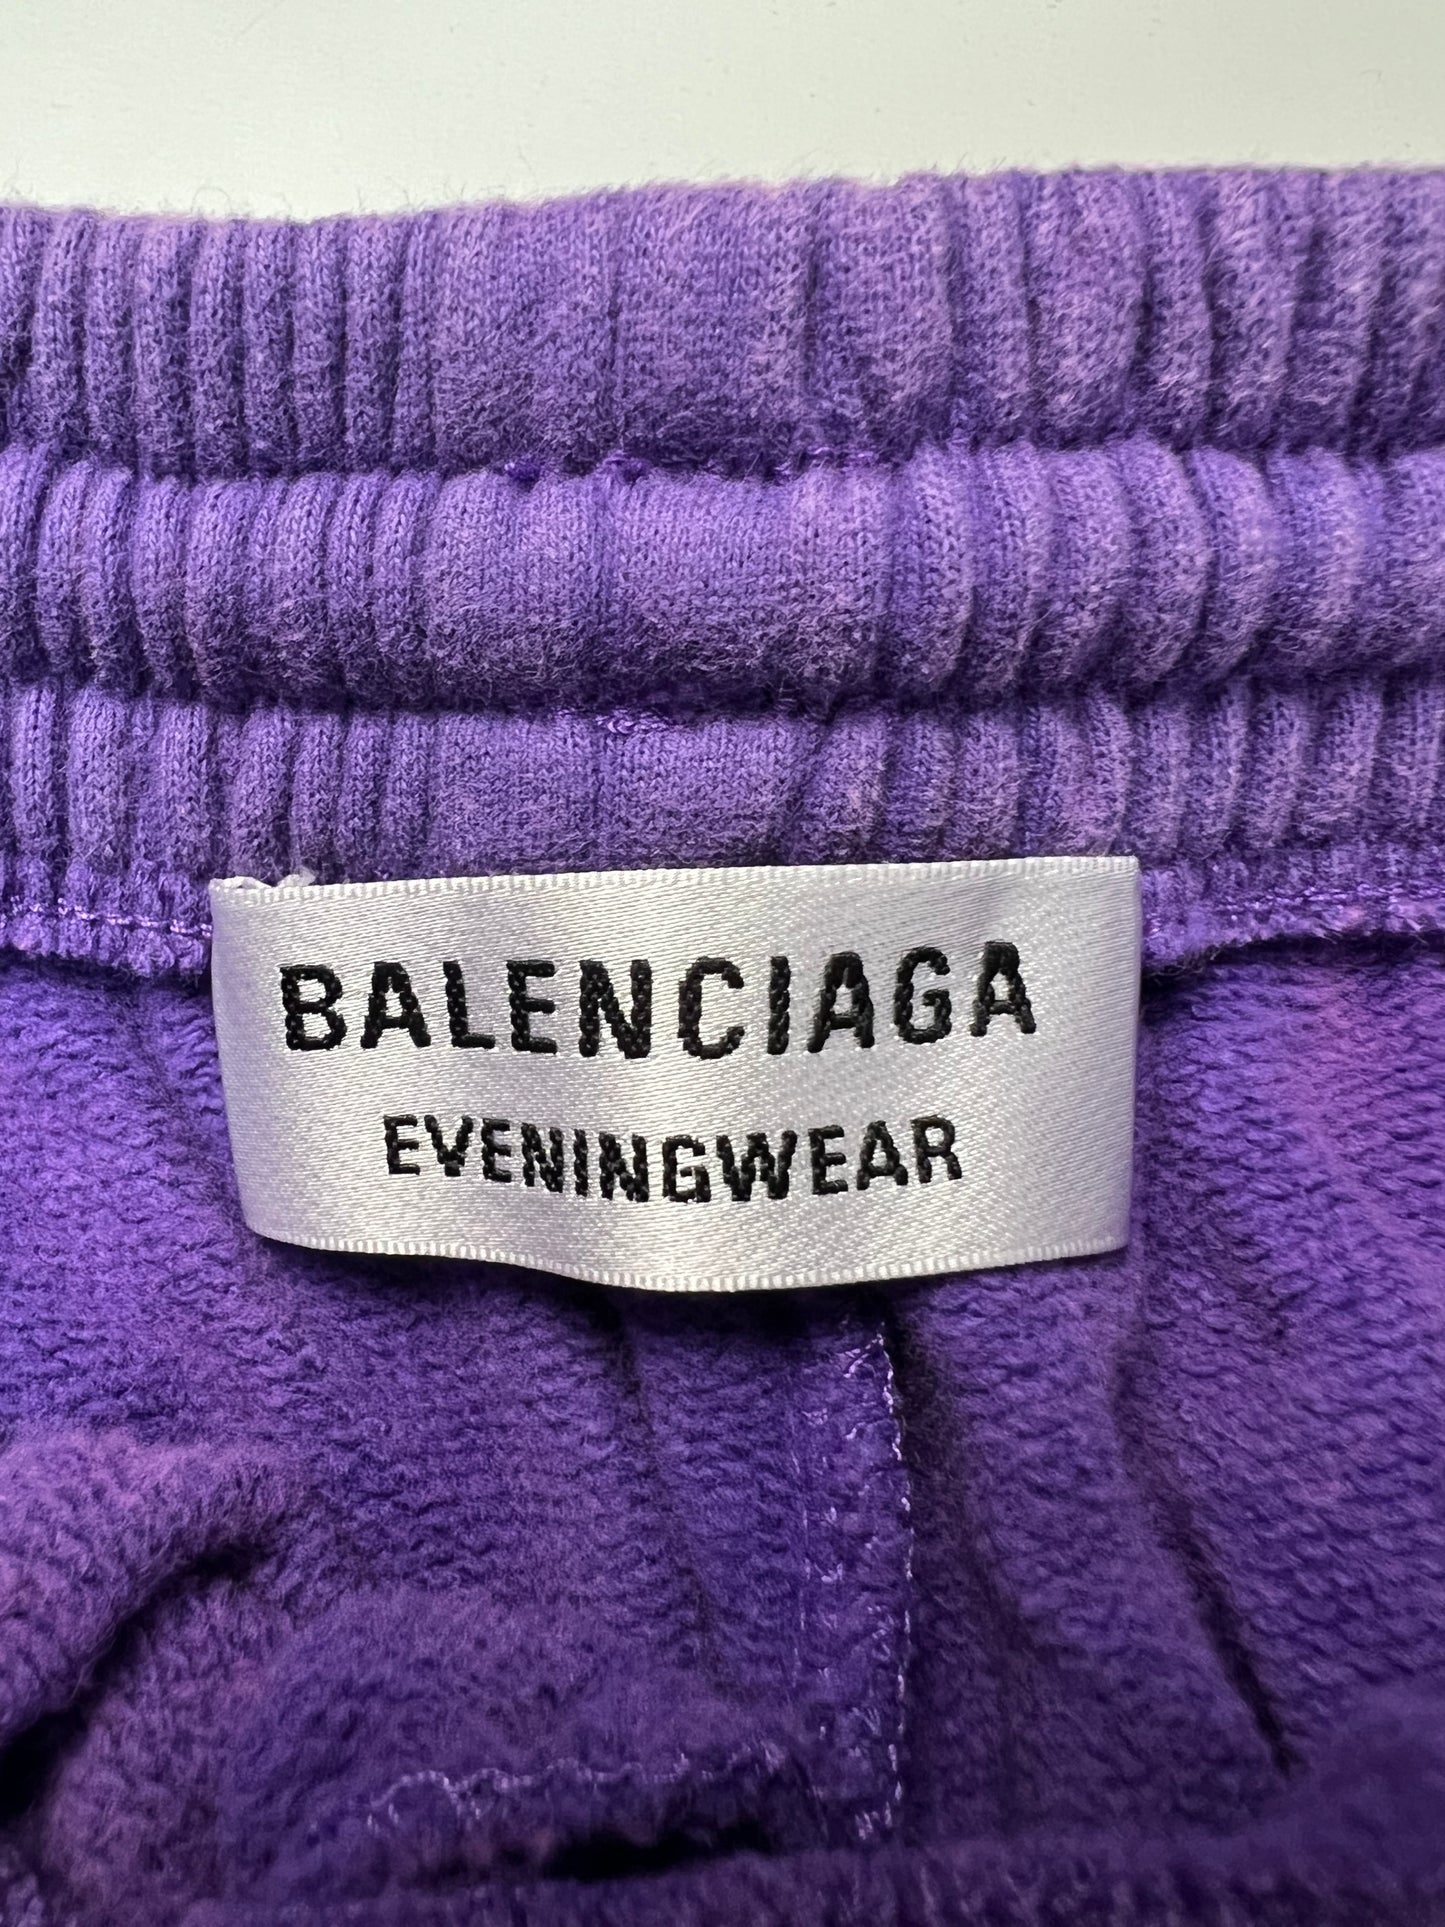 Balenciaga SS22 runway clone wrinkled long Sweatpants in purple SZ:XS|S